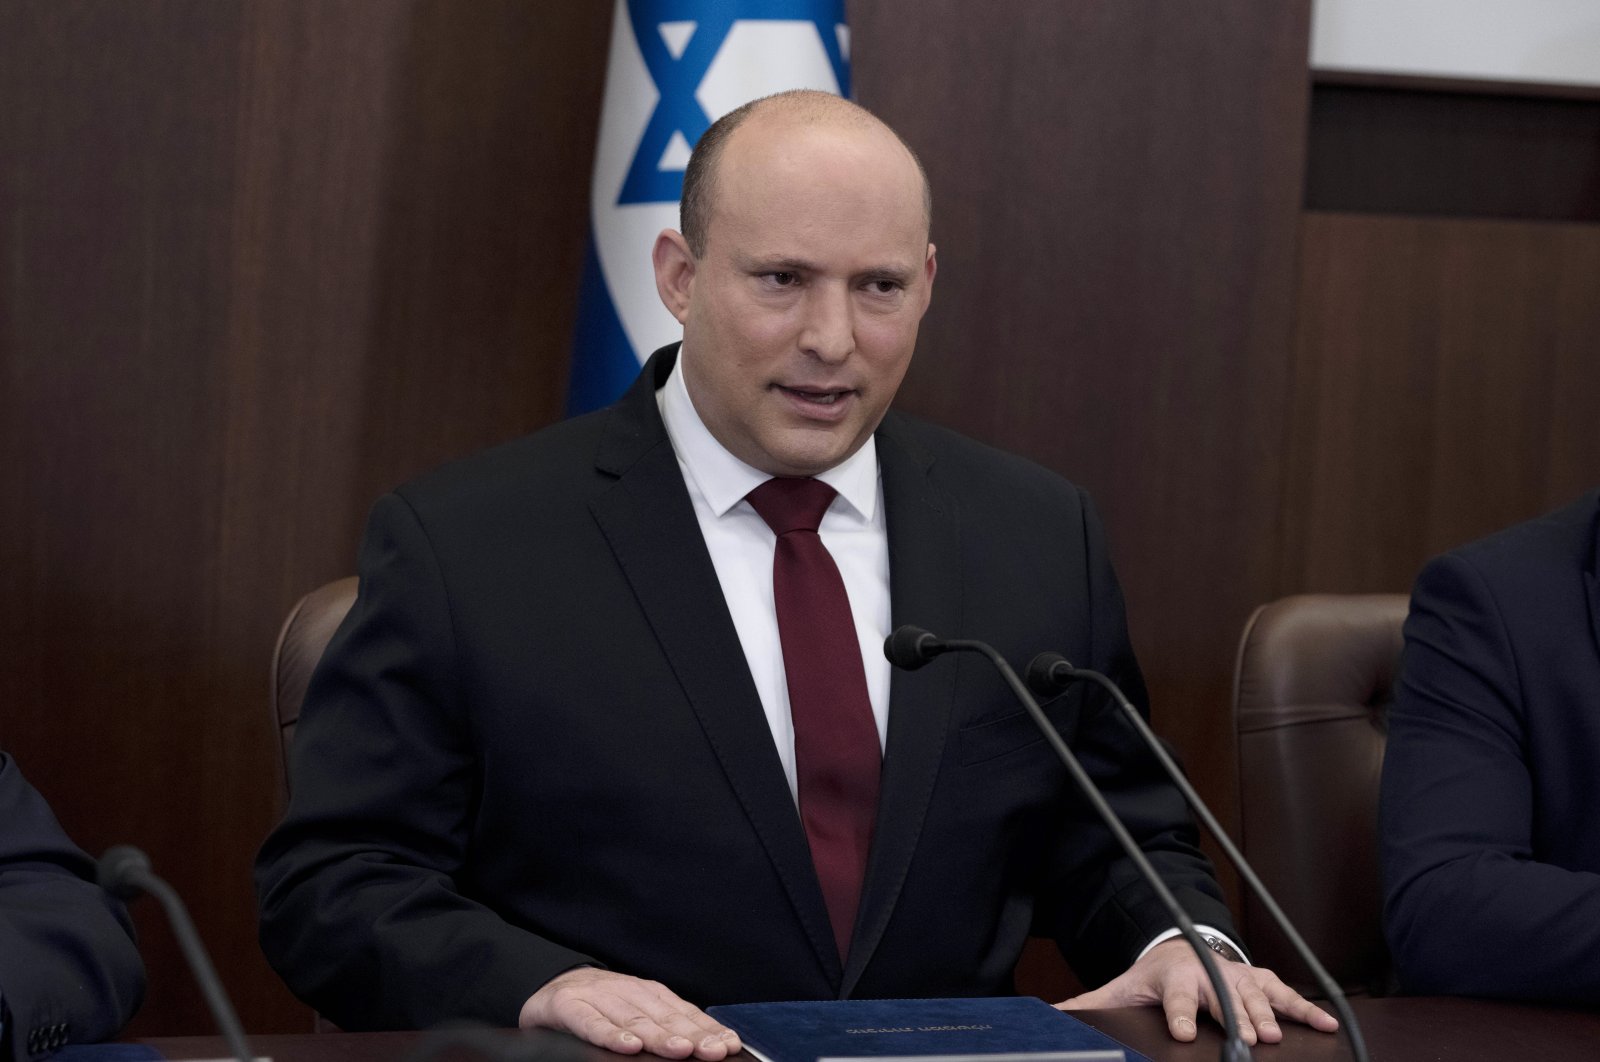 Israeli Prime Minister Naftali Bennett chairs the weekly cabinet meeting in Jerusalem, Sunday, March 20, 2022. (AP Photo/Maya Alleruzzo, Pool)